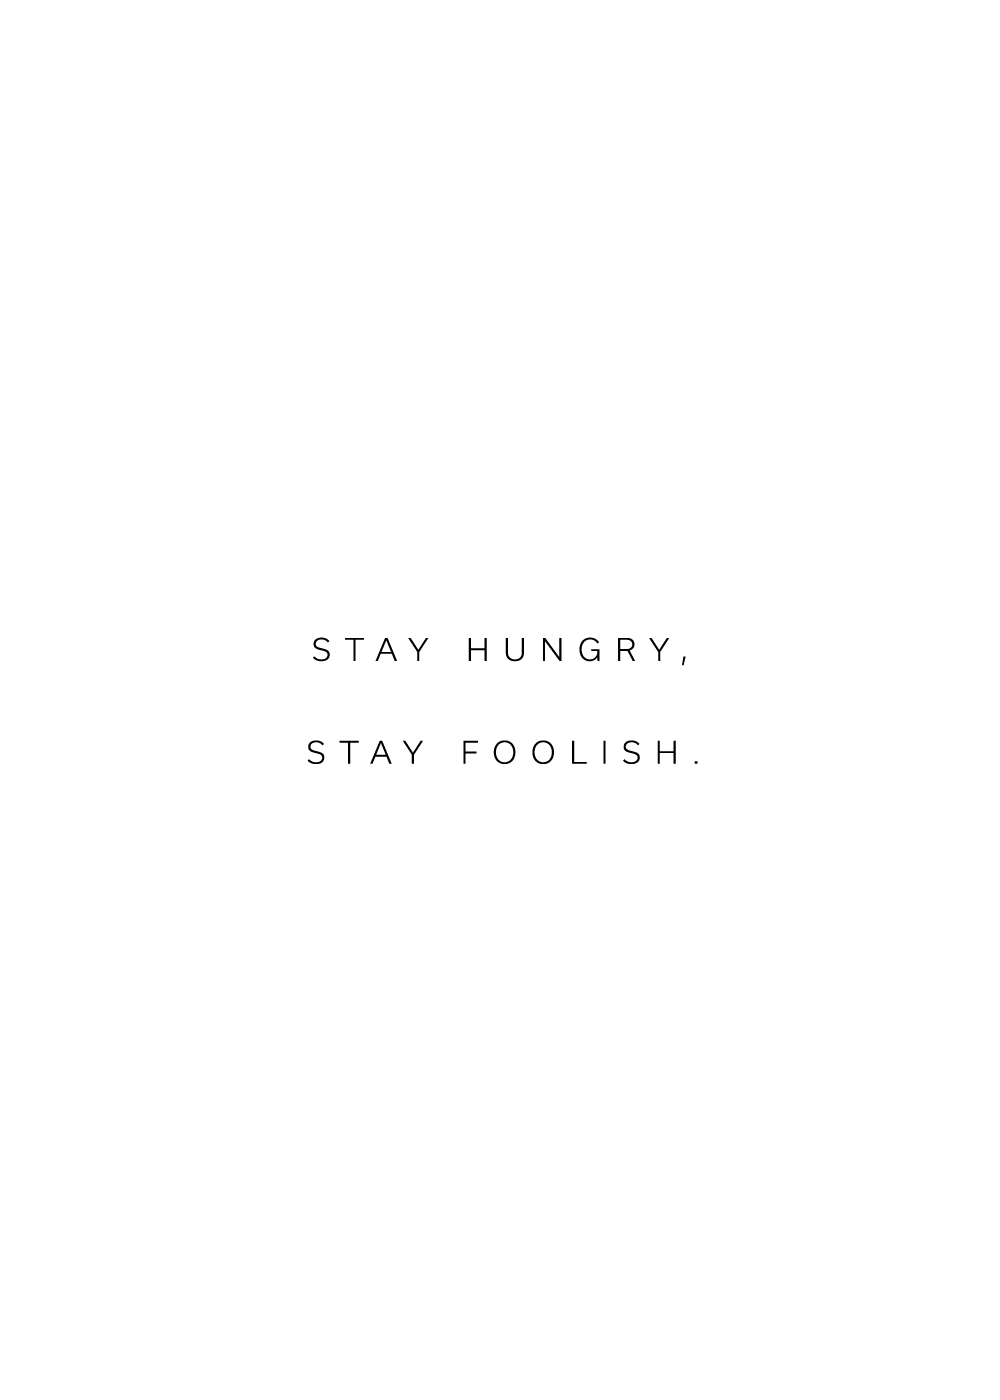 "Stay hungry, stay foolish" - Steve Jobs citatplakat